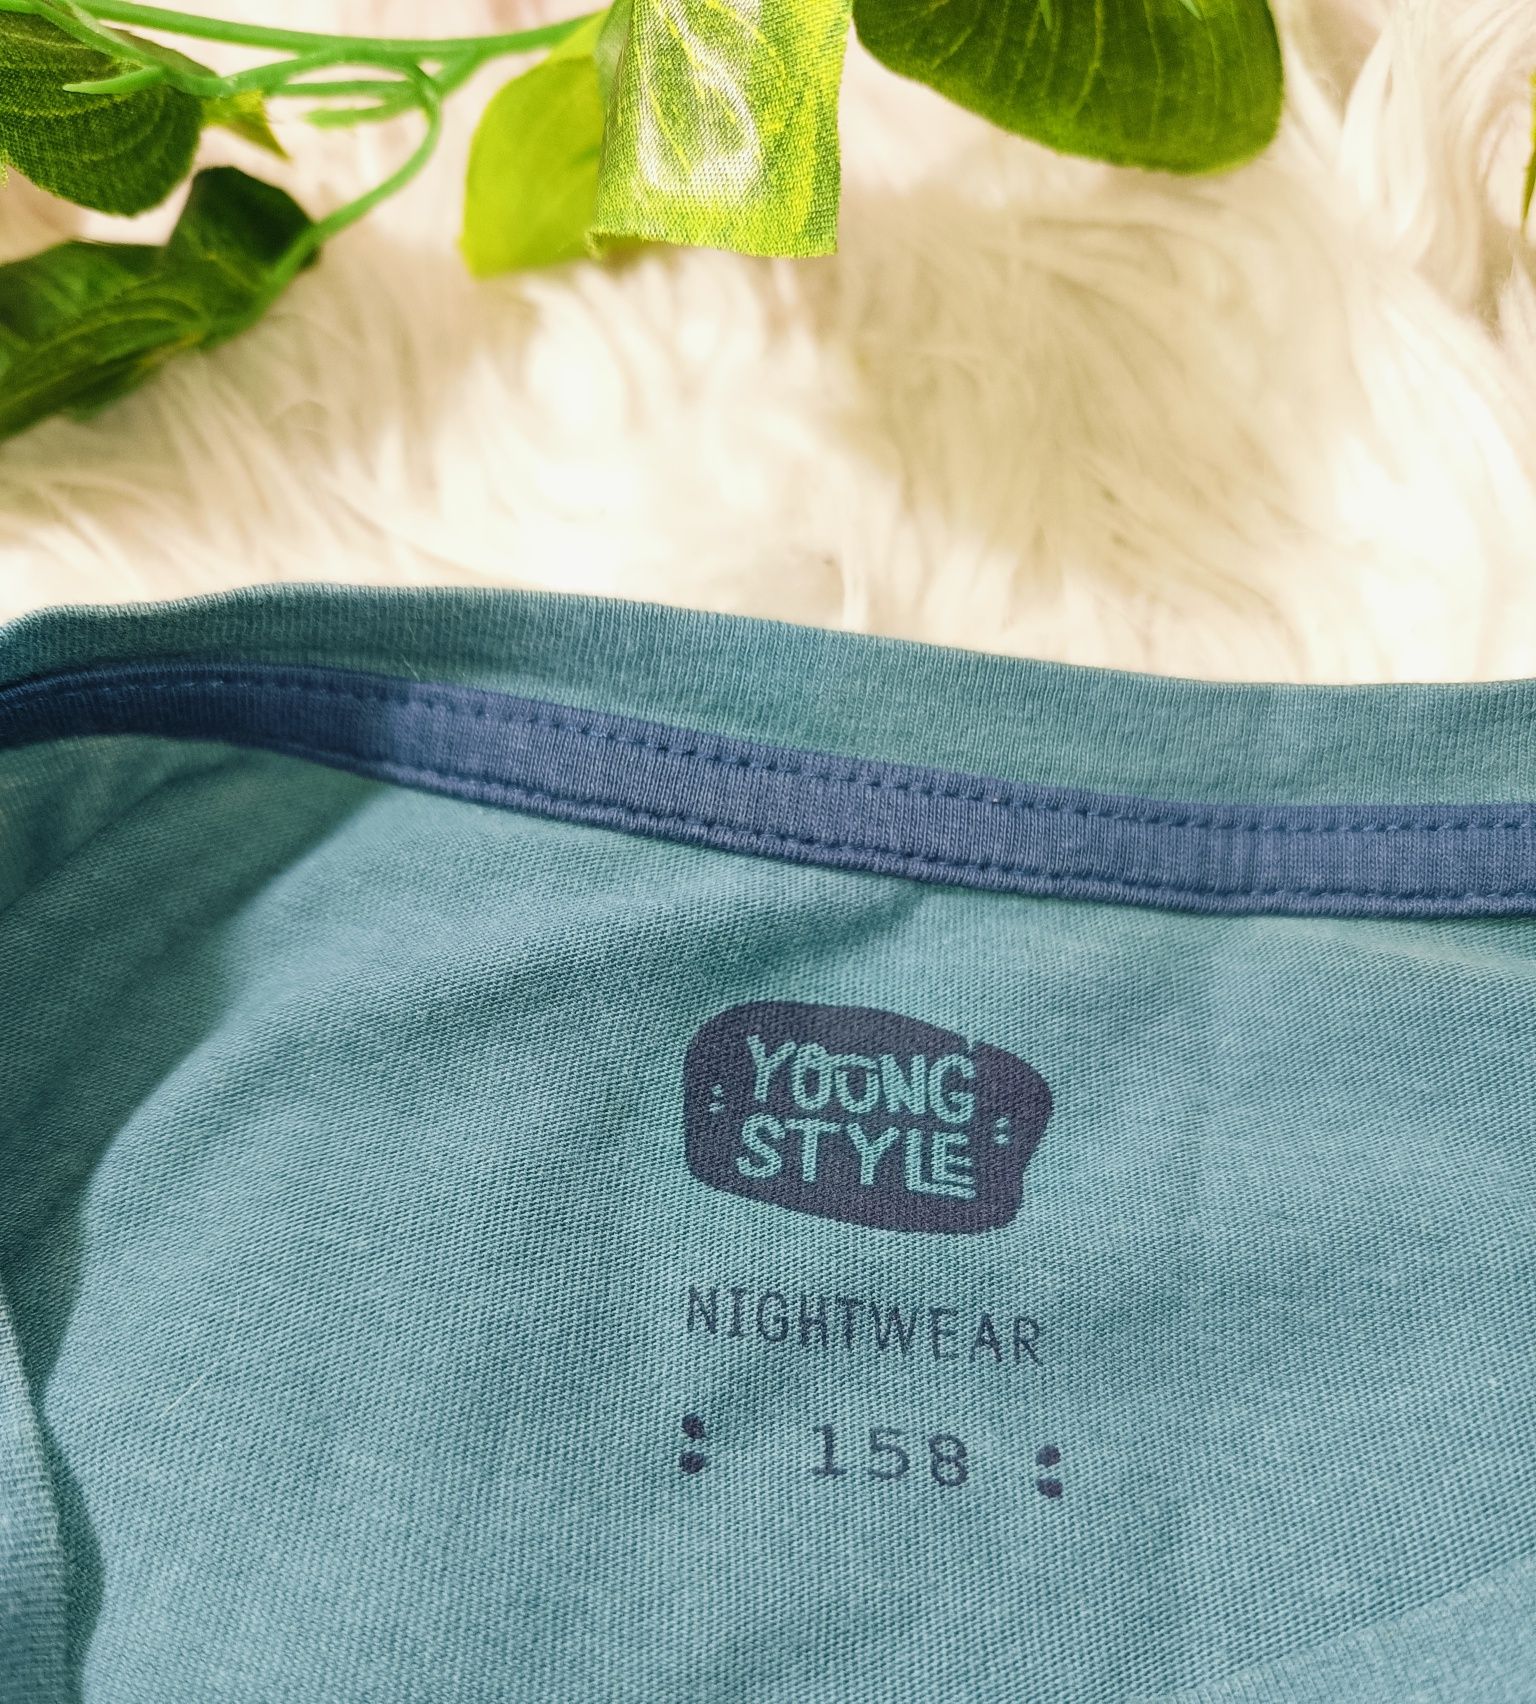 T-shirt firmy Young Style rozmiar 158